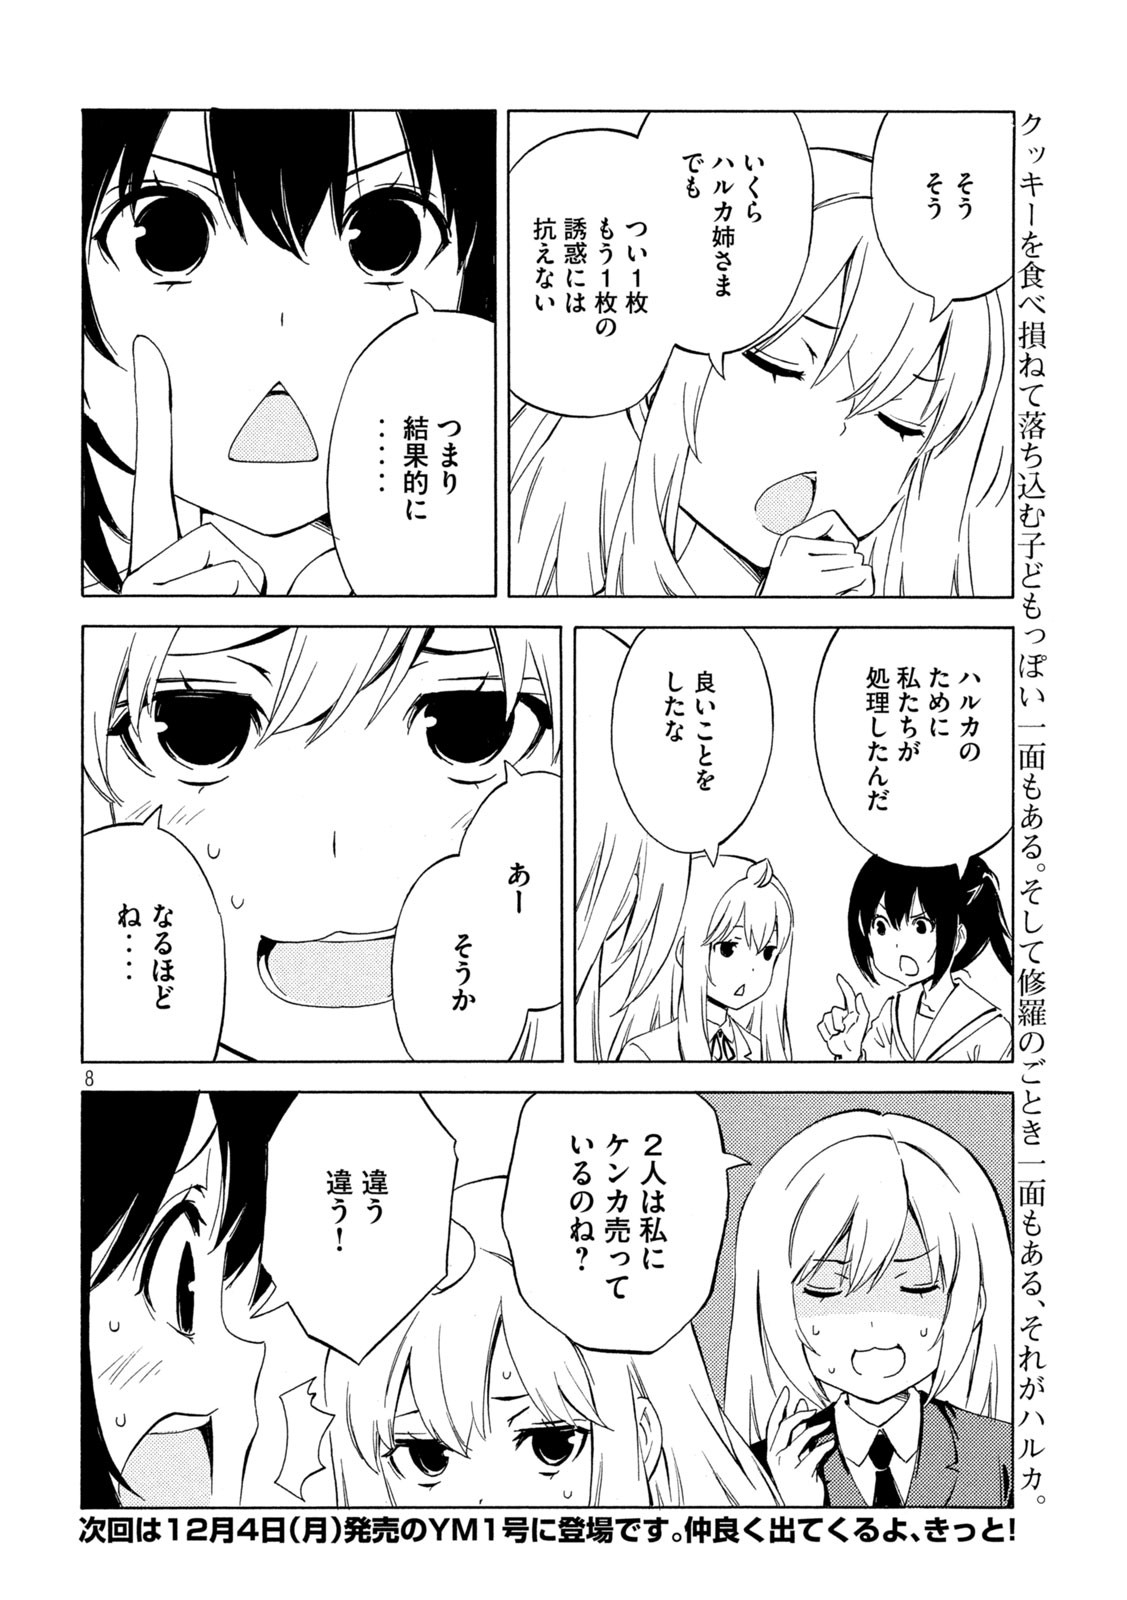 Minami-ke - Chapter 473 - Page 8